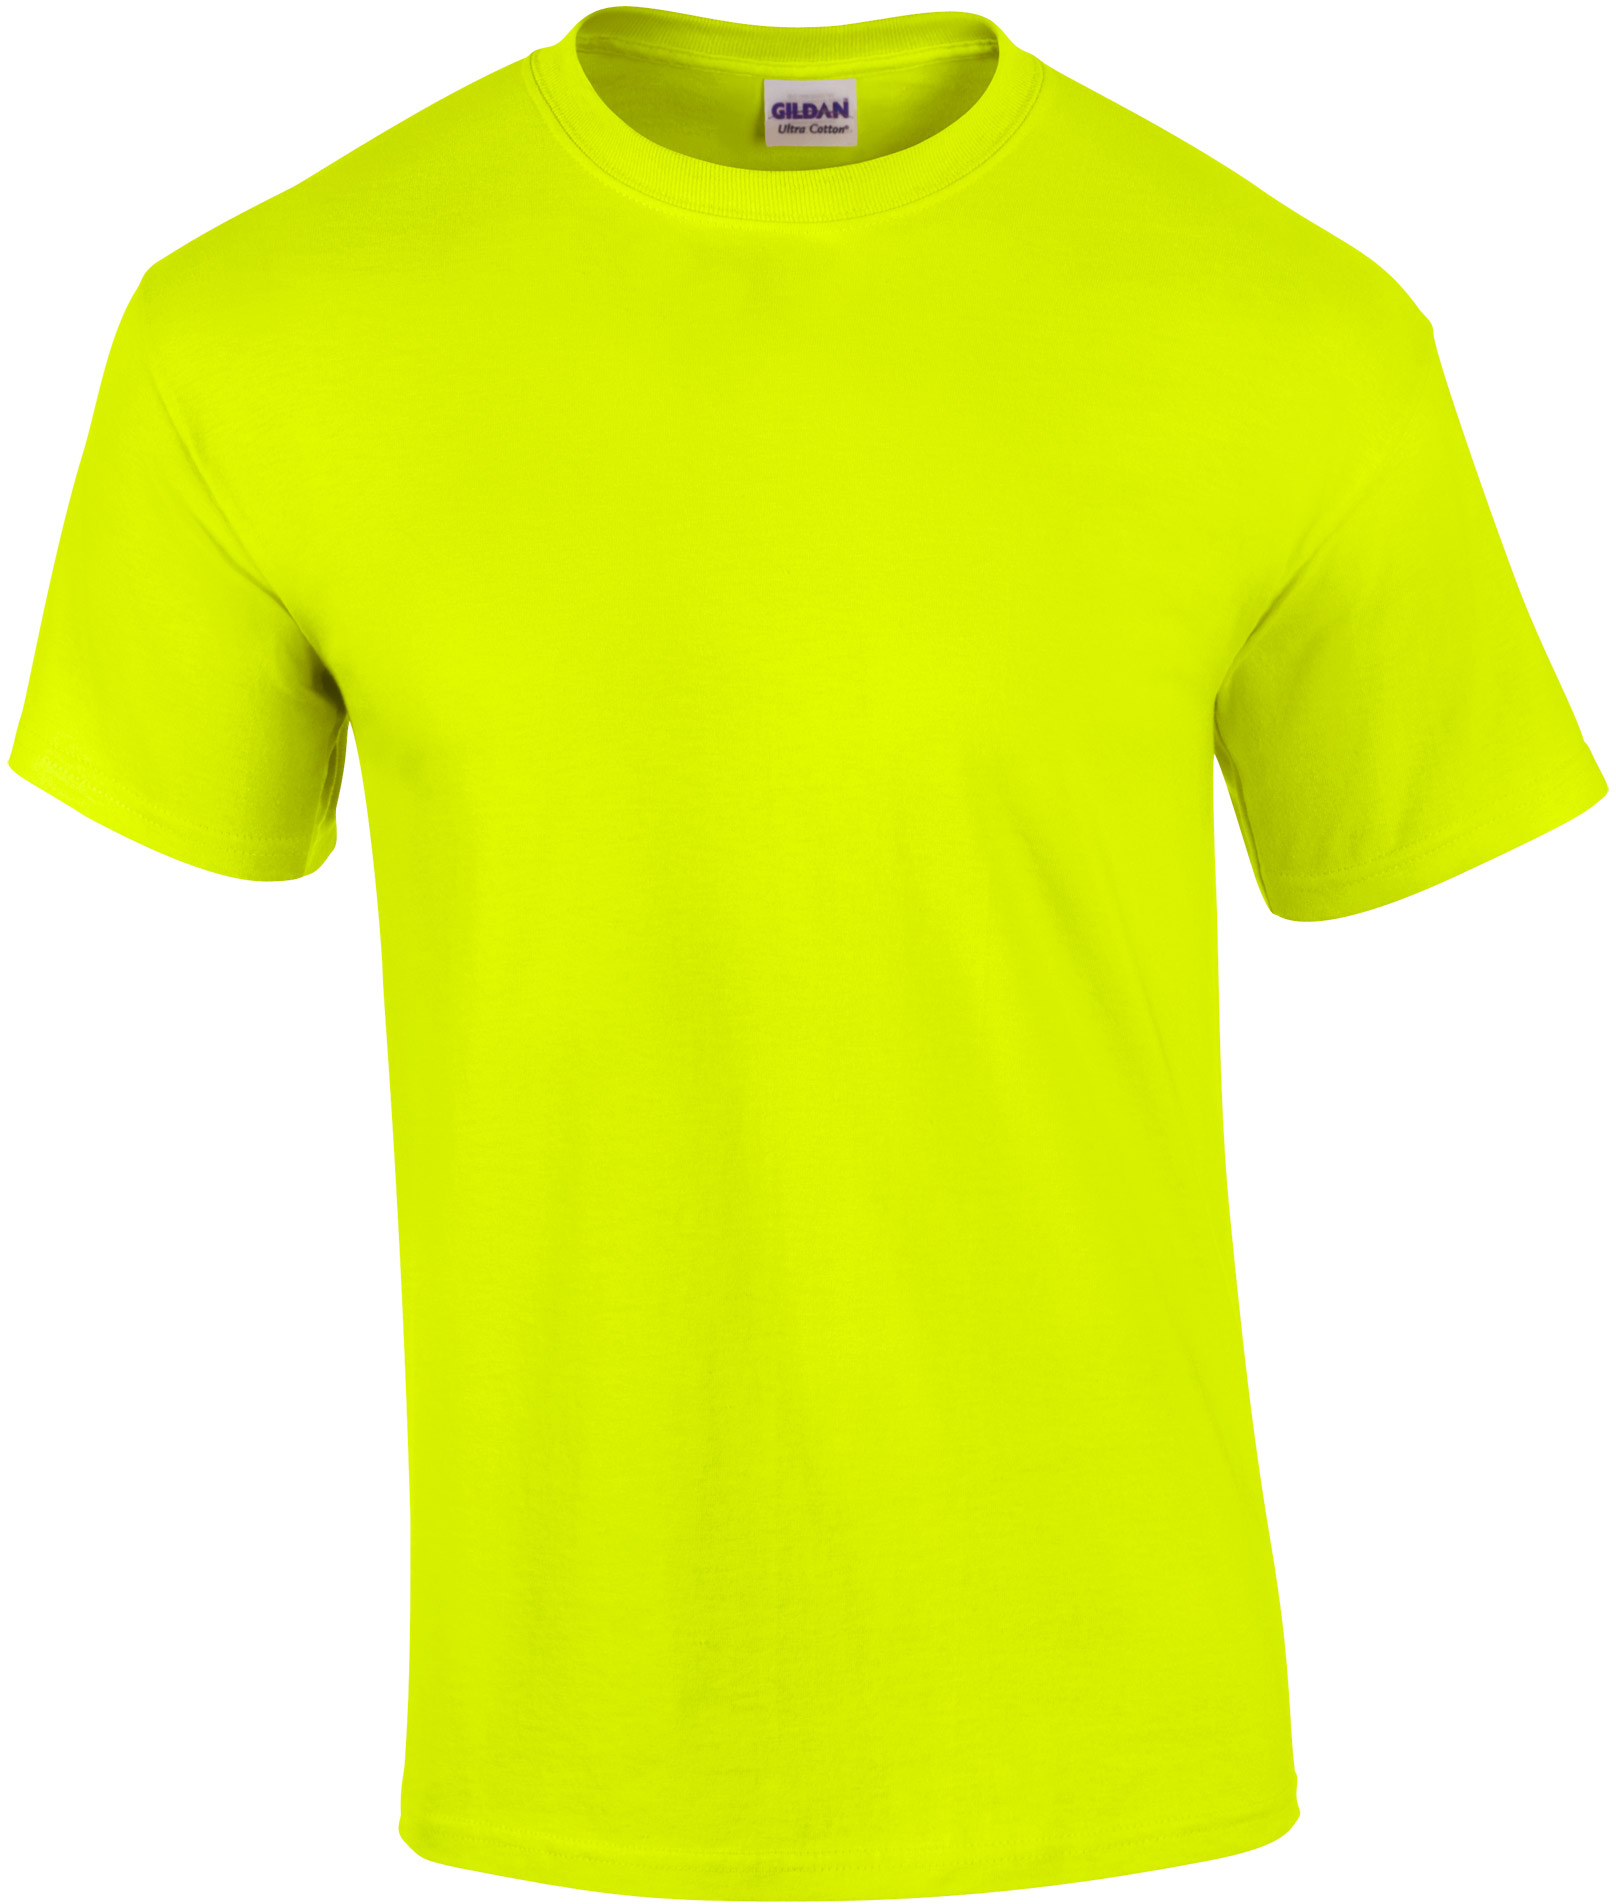 Tričko Gildan Ultra - Neonová žlutá S